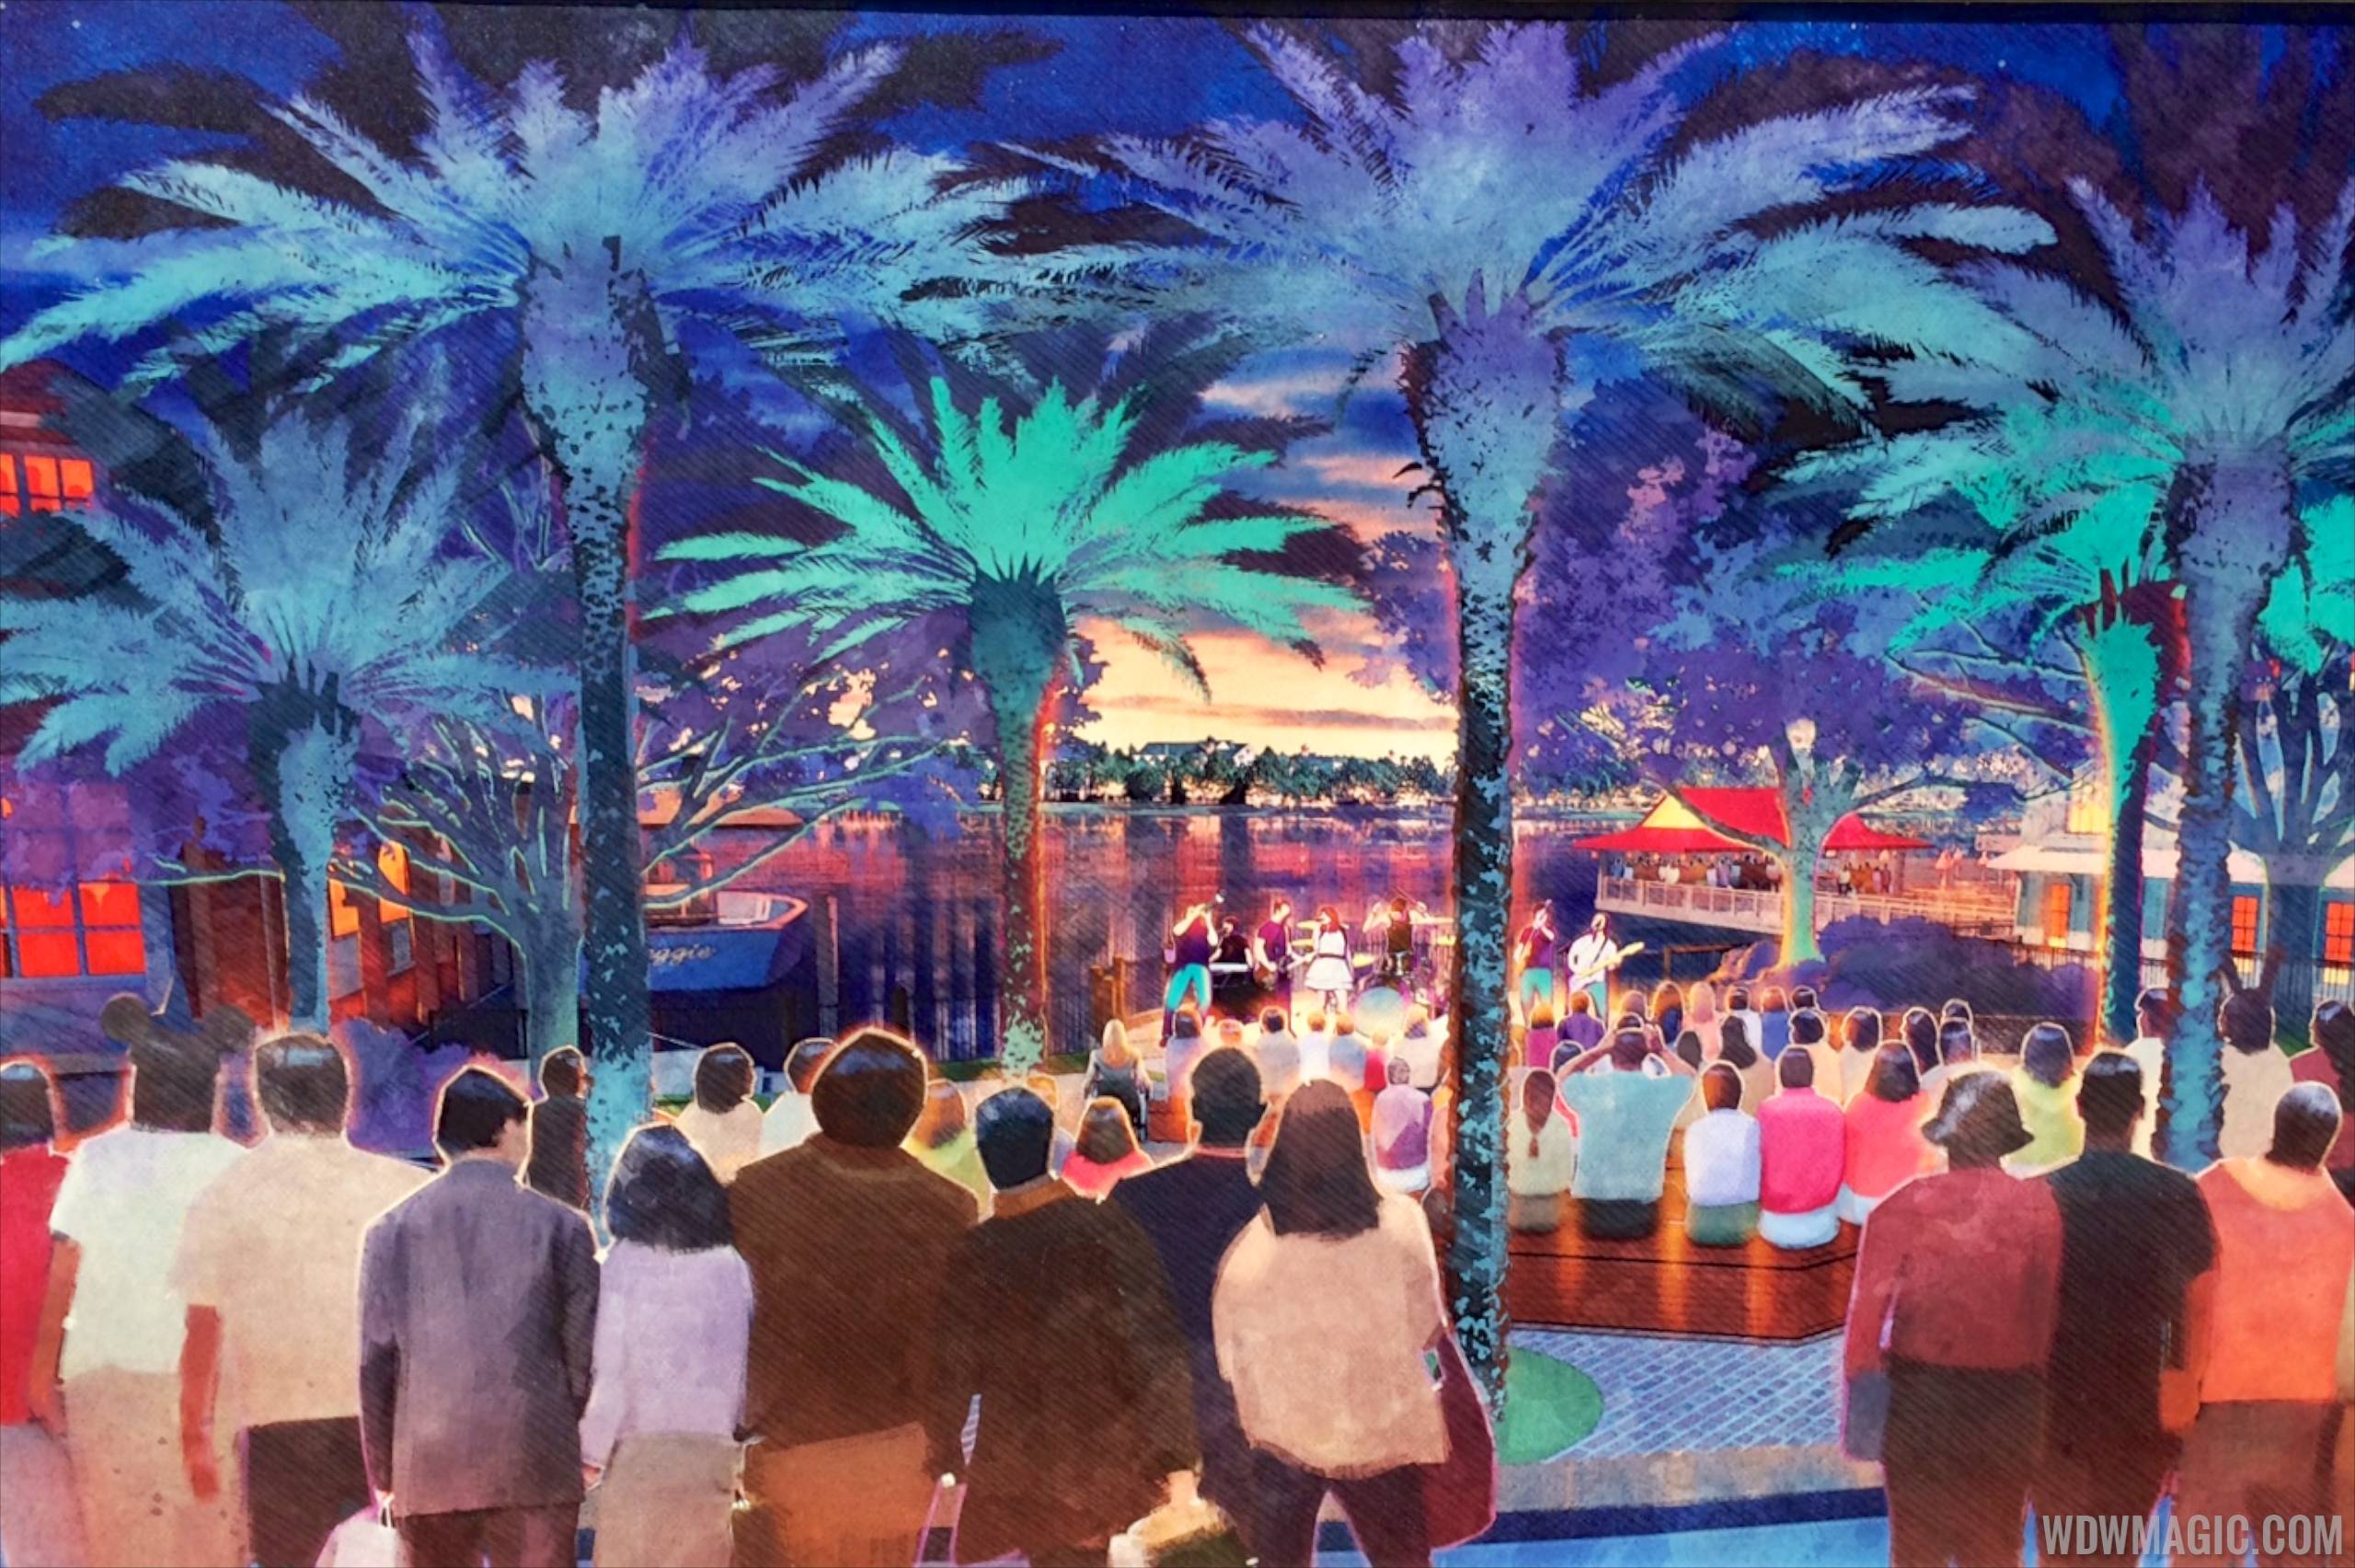 PHOTOS - New Disney Springs concept art shows more of 'The Landing'